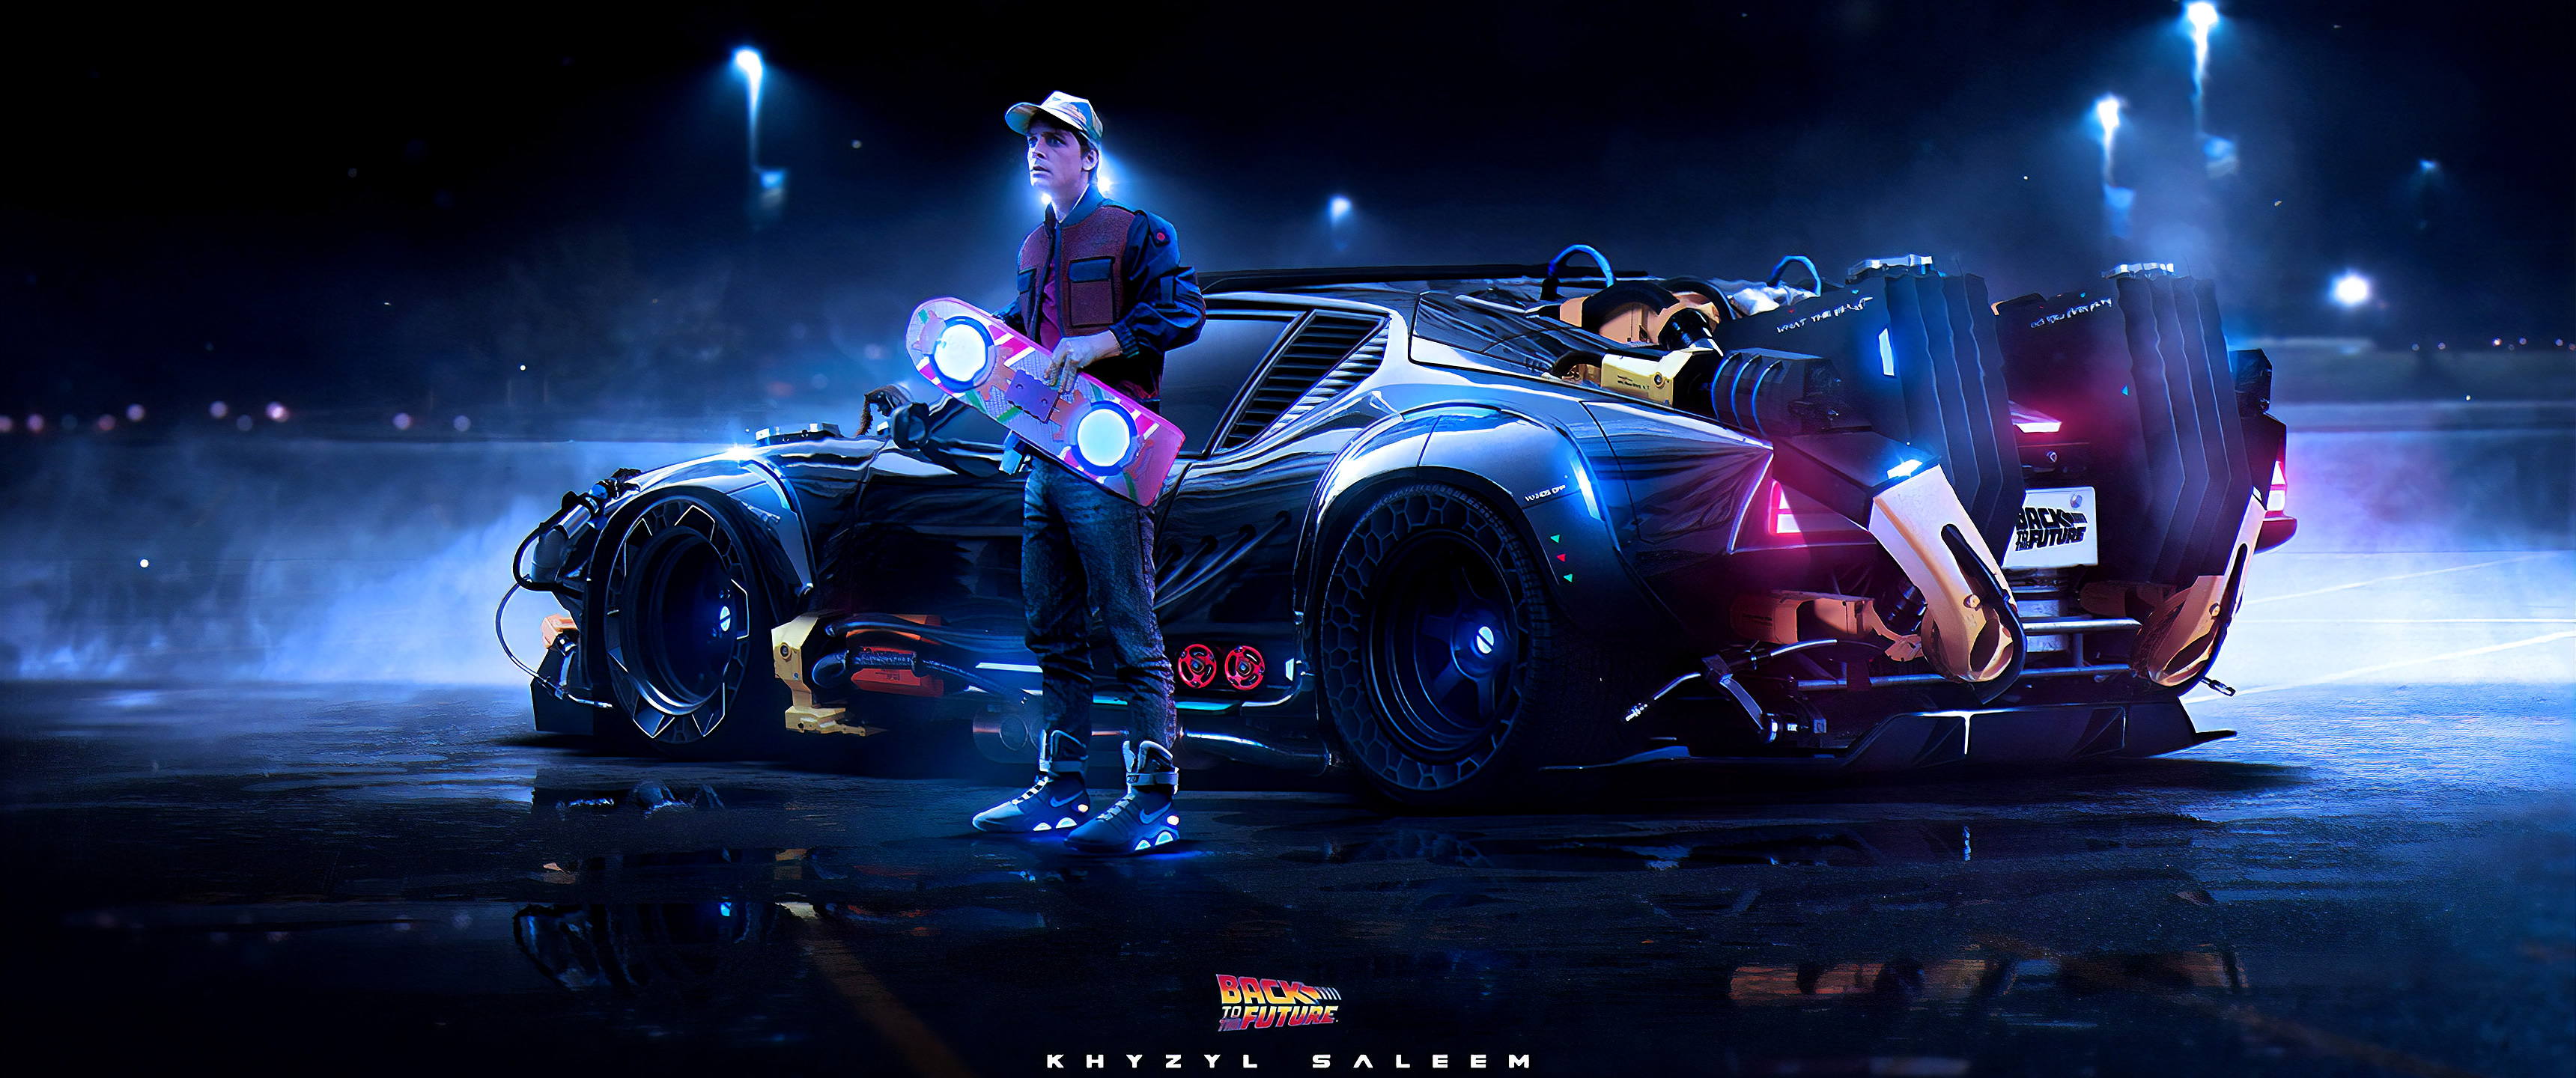 Artwork Digital Art Purple Car Futuristic Concept Art Supercars Marty McFly Back To The Future Hover 3440x1440